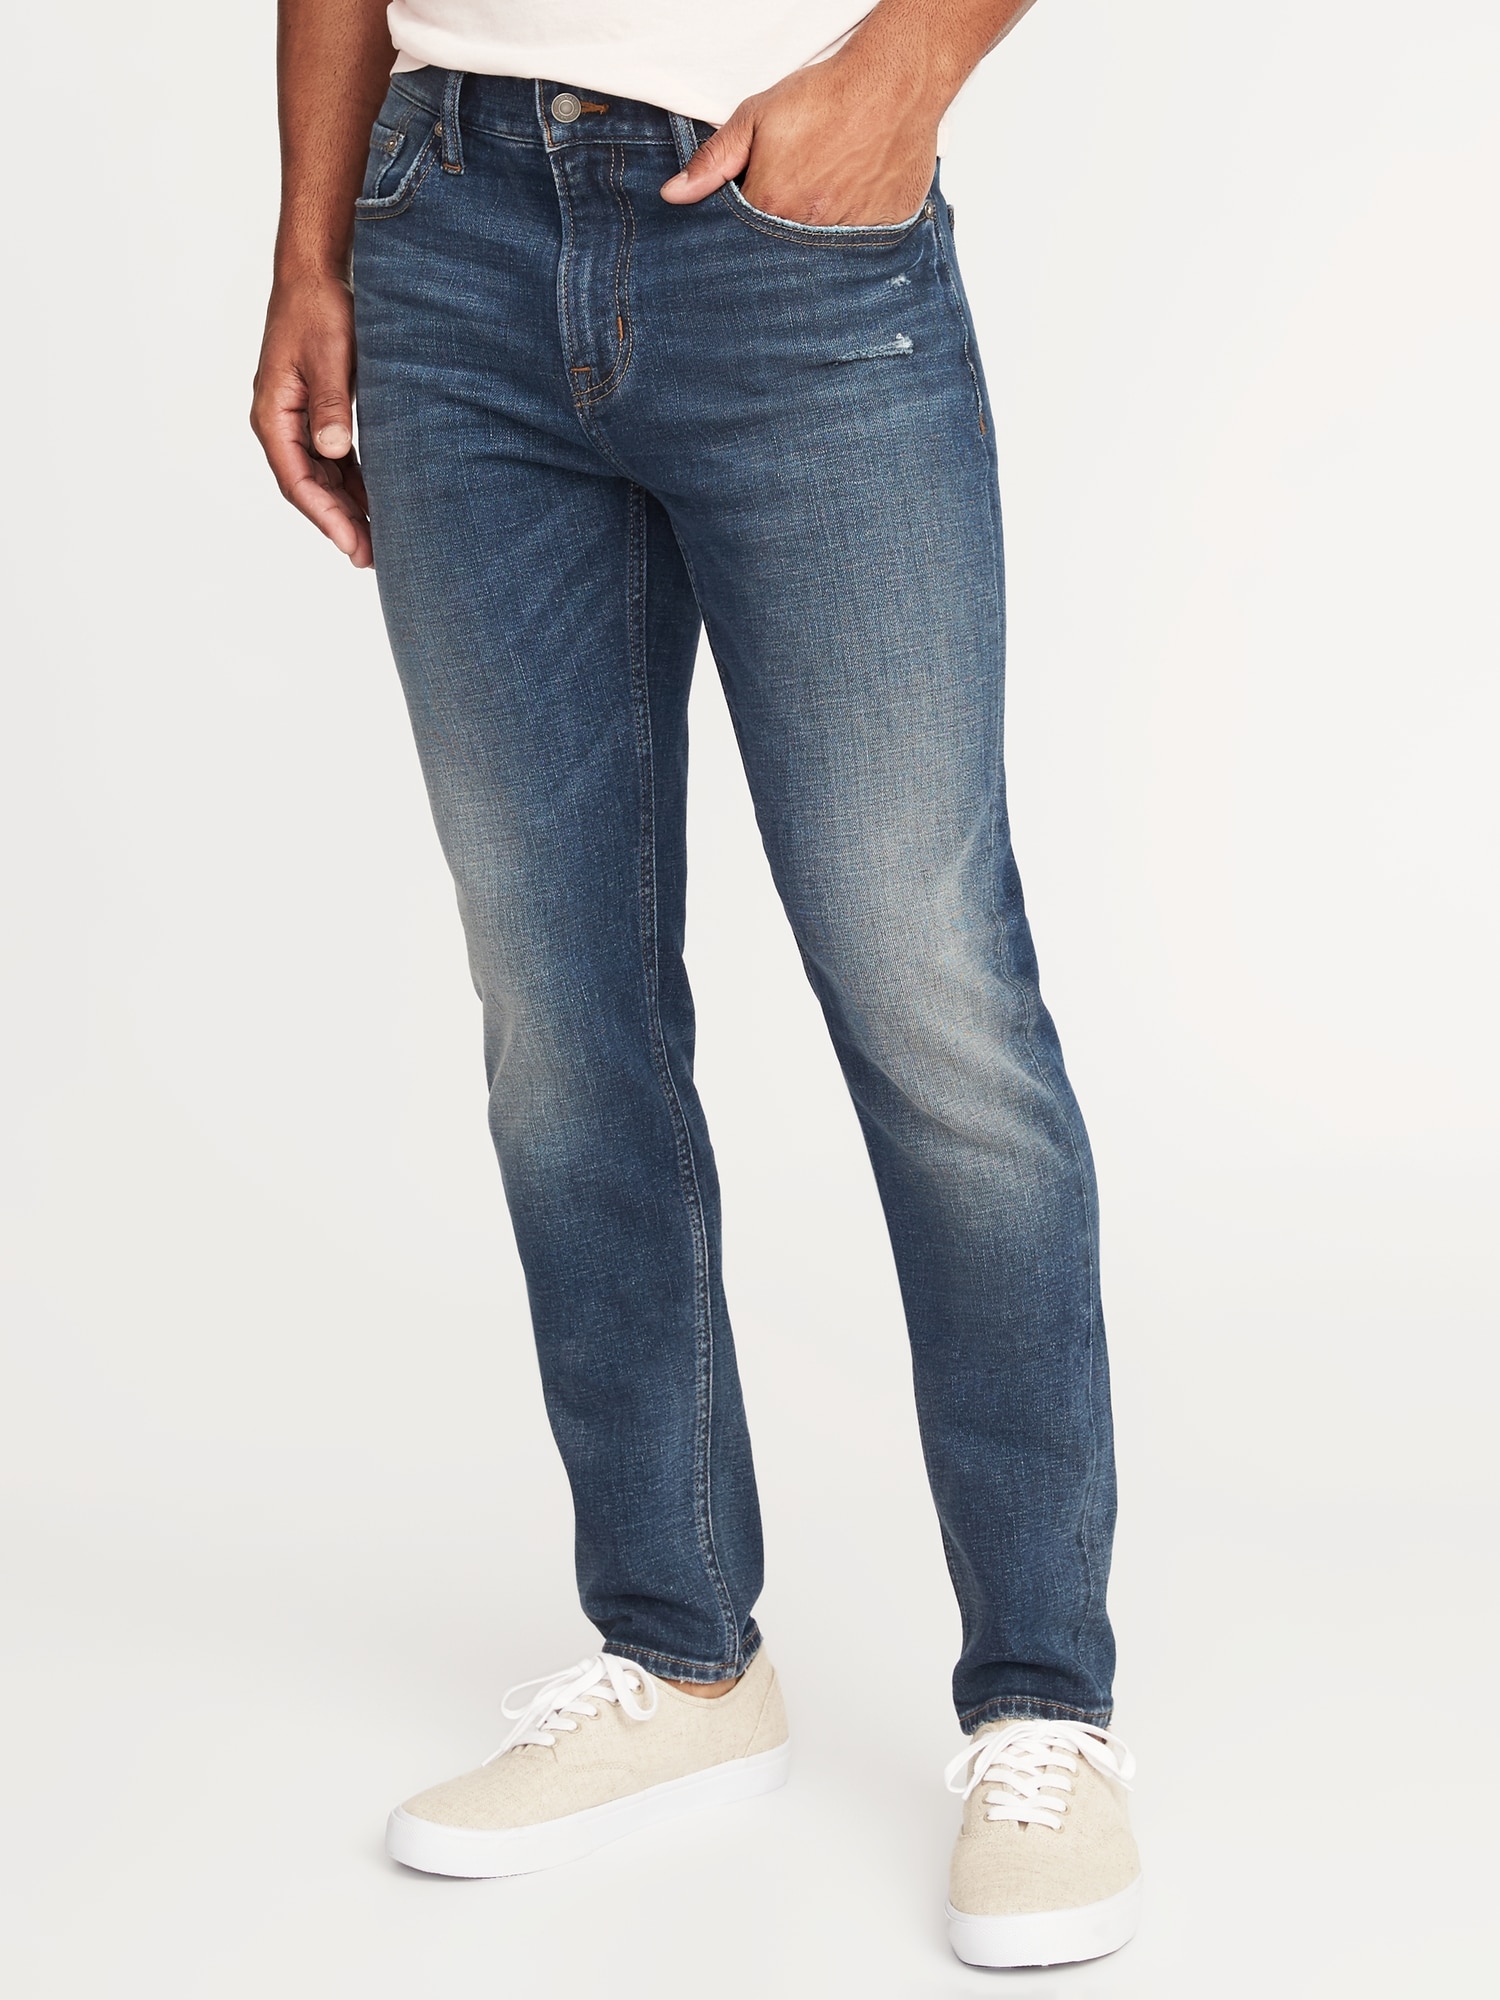 men's relaxed slim jeans